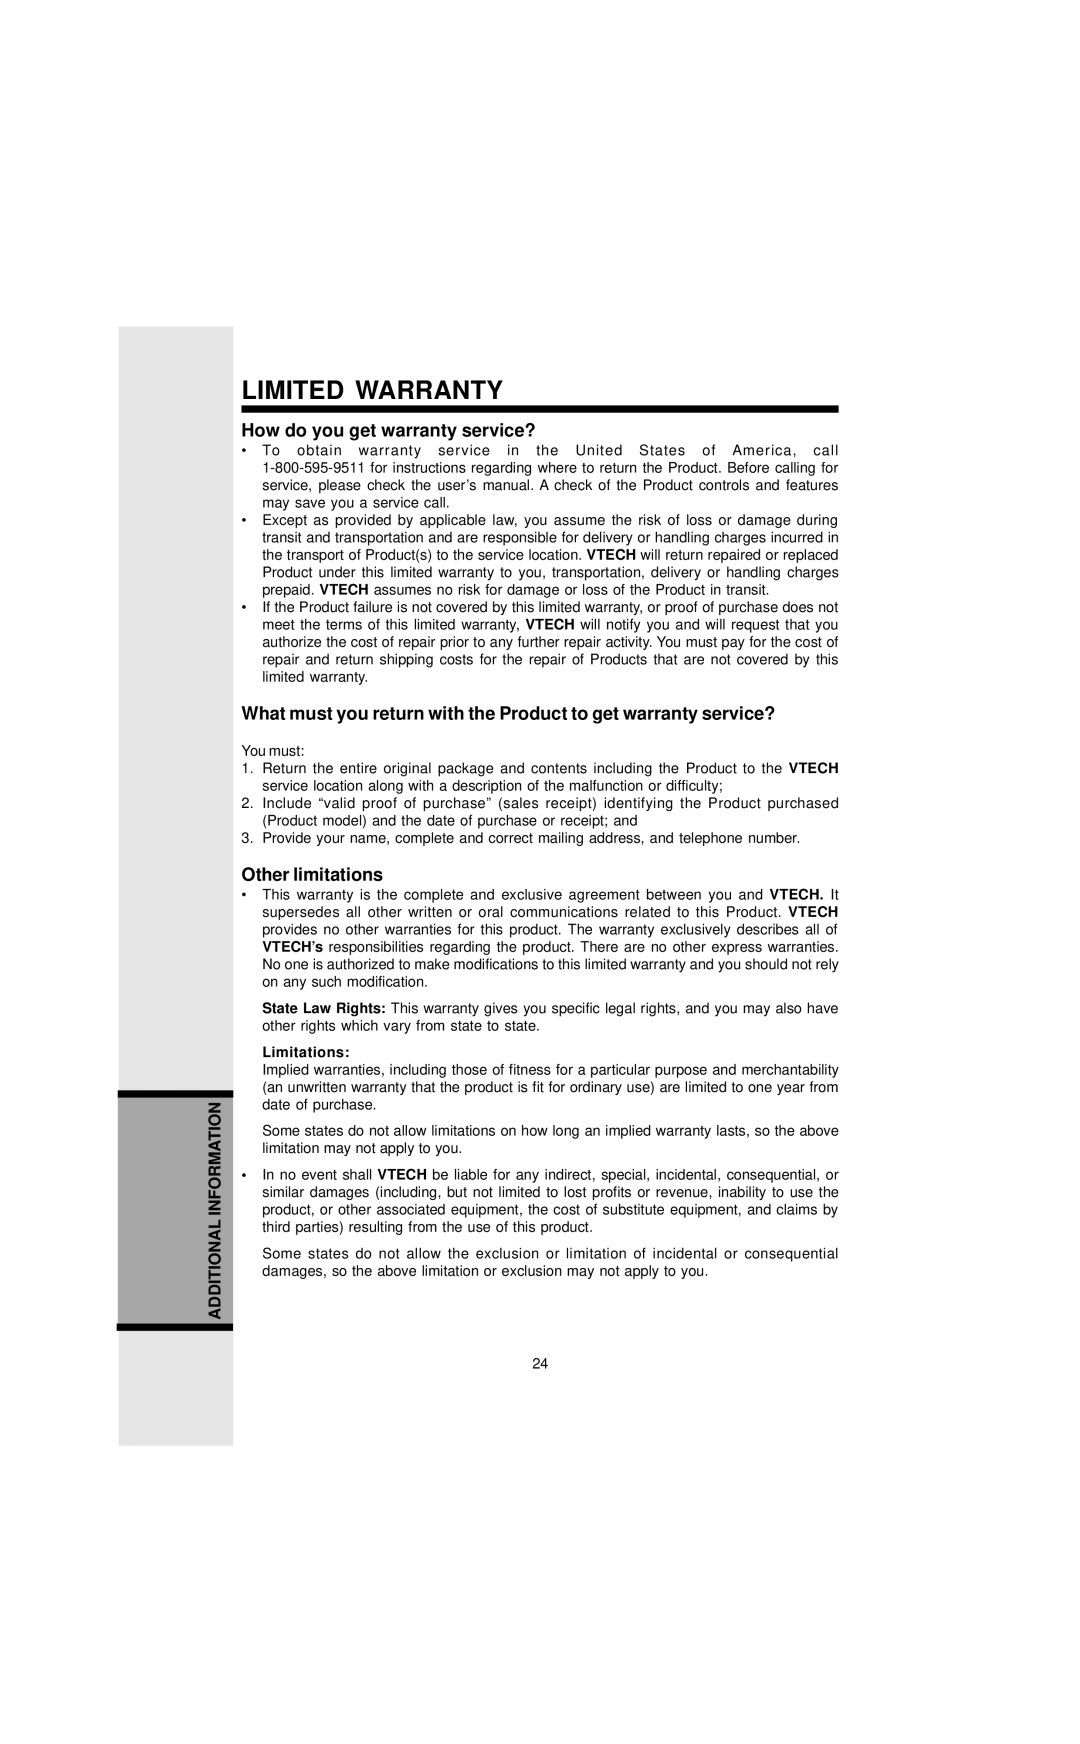 VTech 9127 important safety instructions How do you get warranty service?, Limitations 